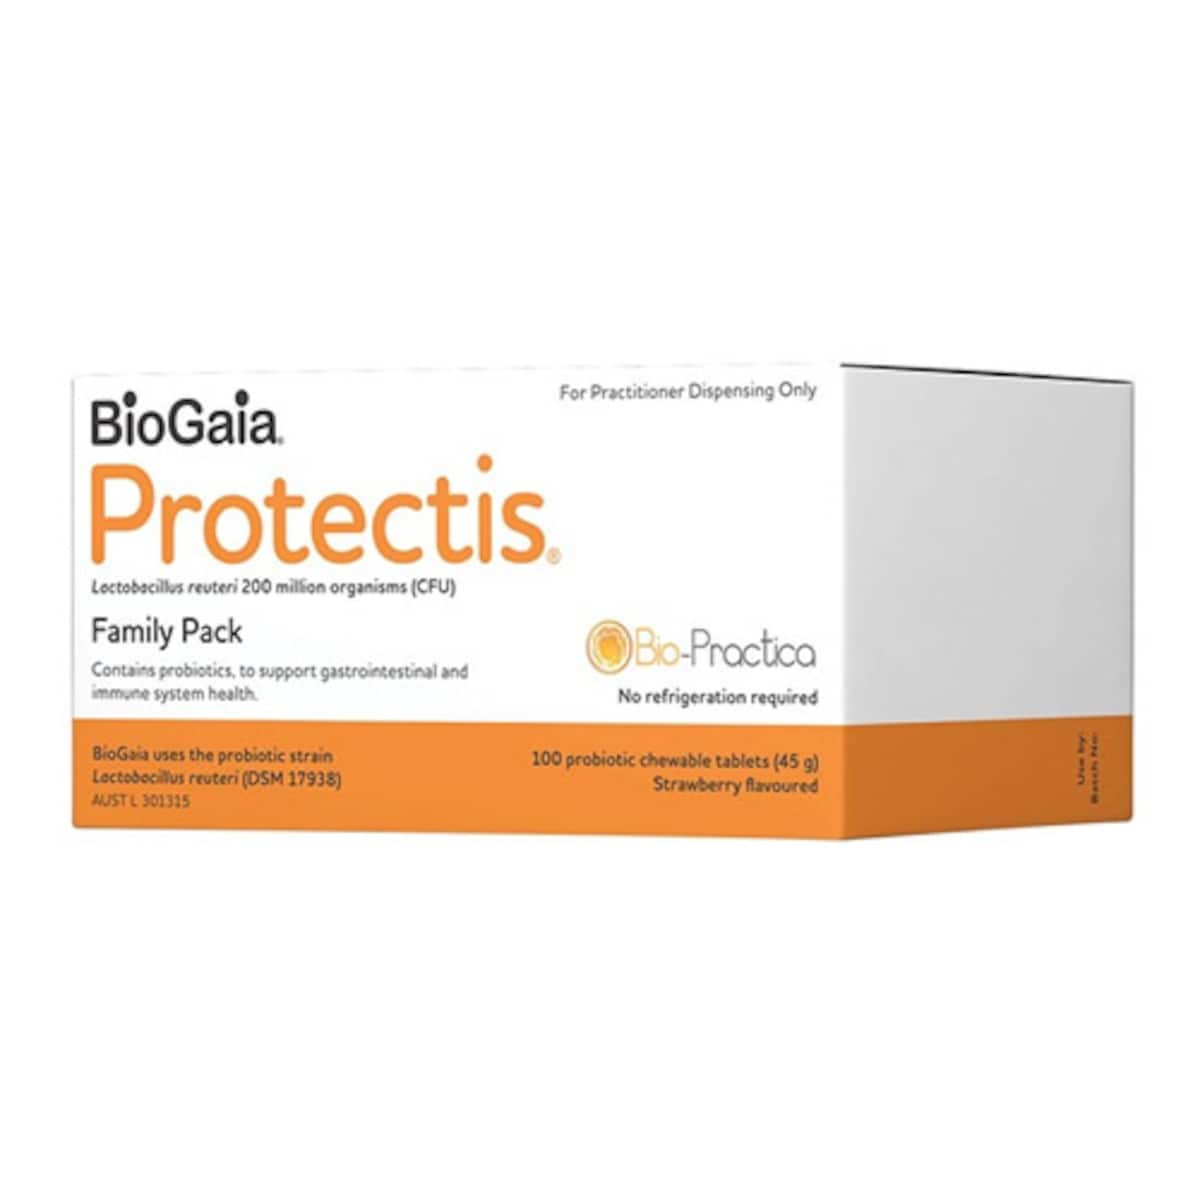 Bio-Practica BioGaia Protectis 100 Chewable Tablets